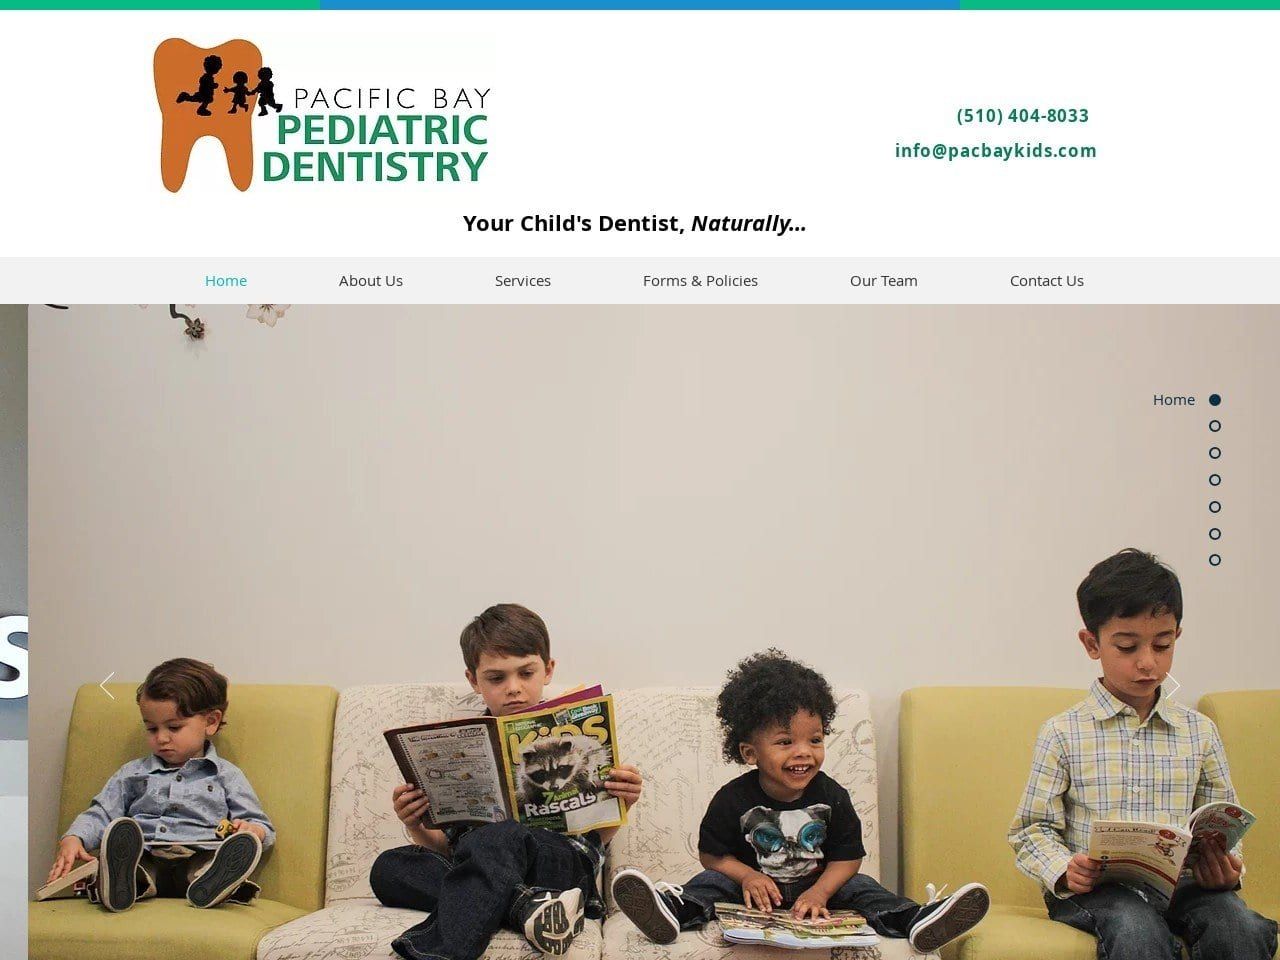 Pacific Bay Pediatric Dentist Website Screenshot from pacbaykids.com